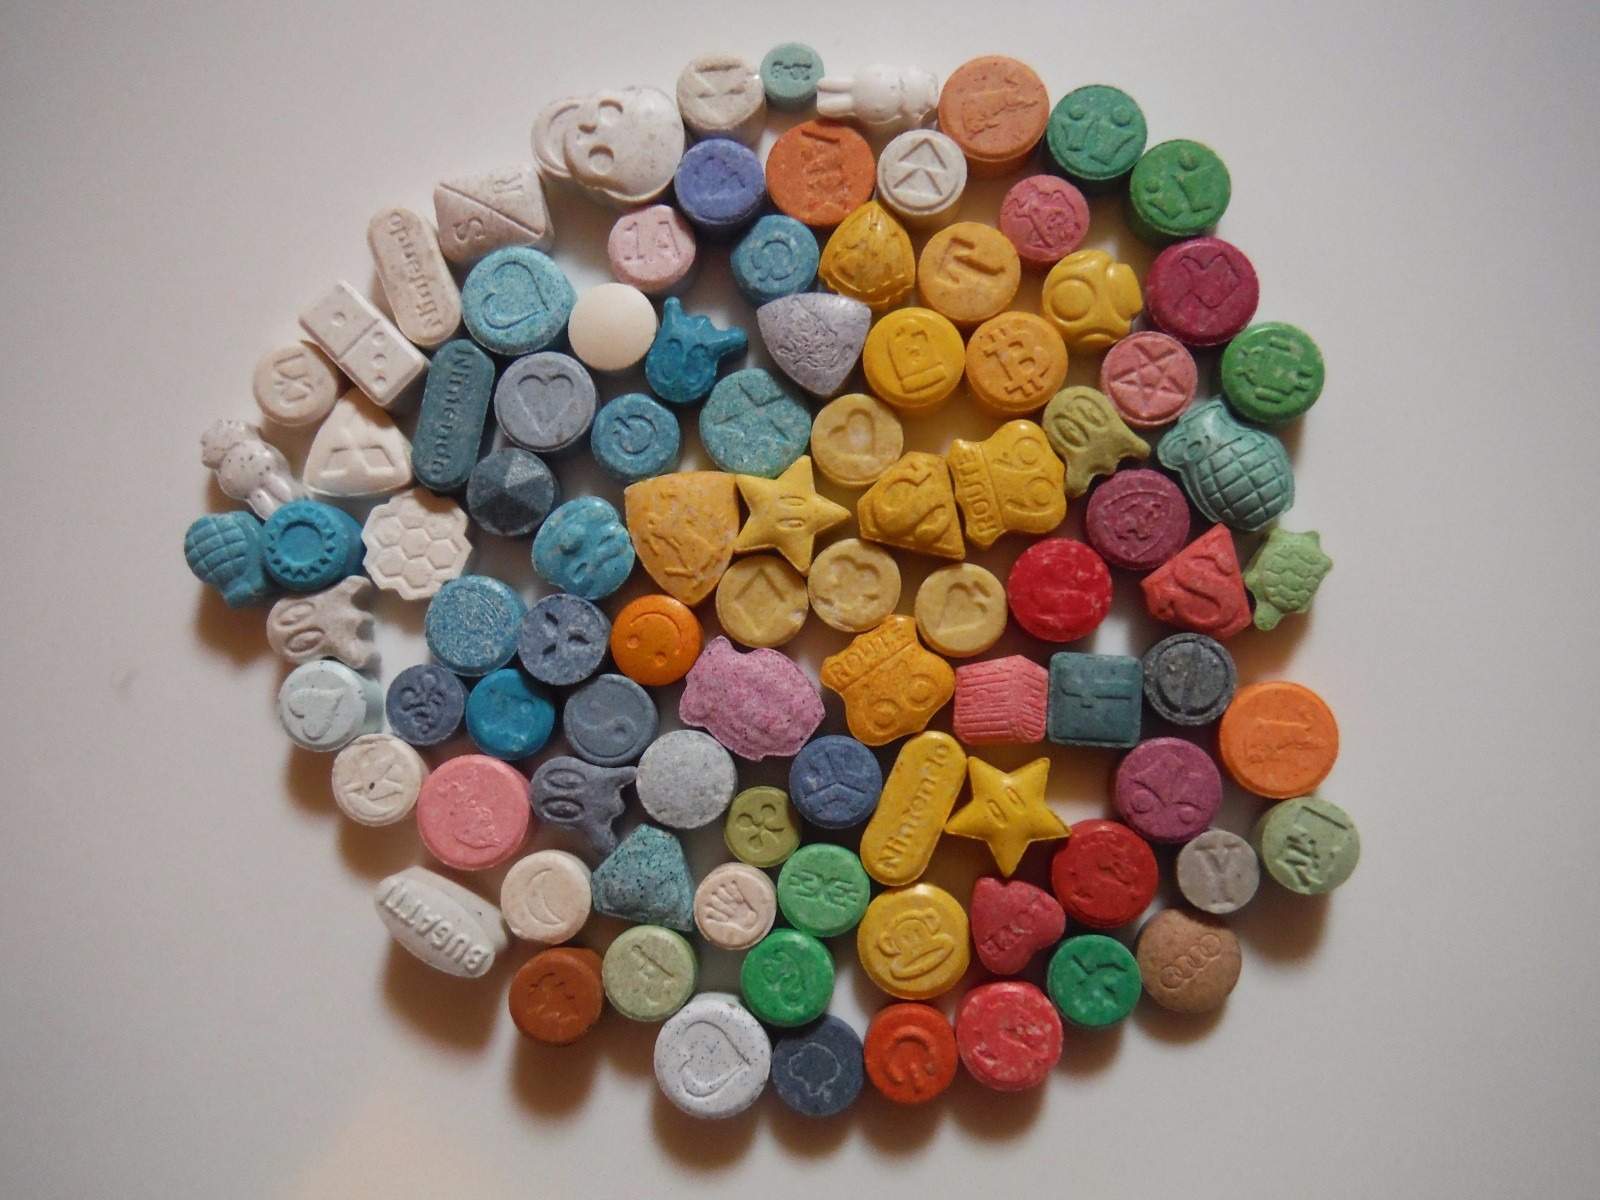 Dxm Pills